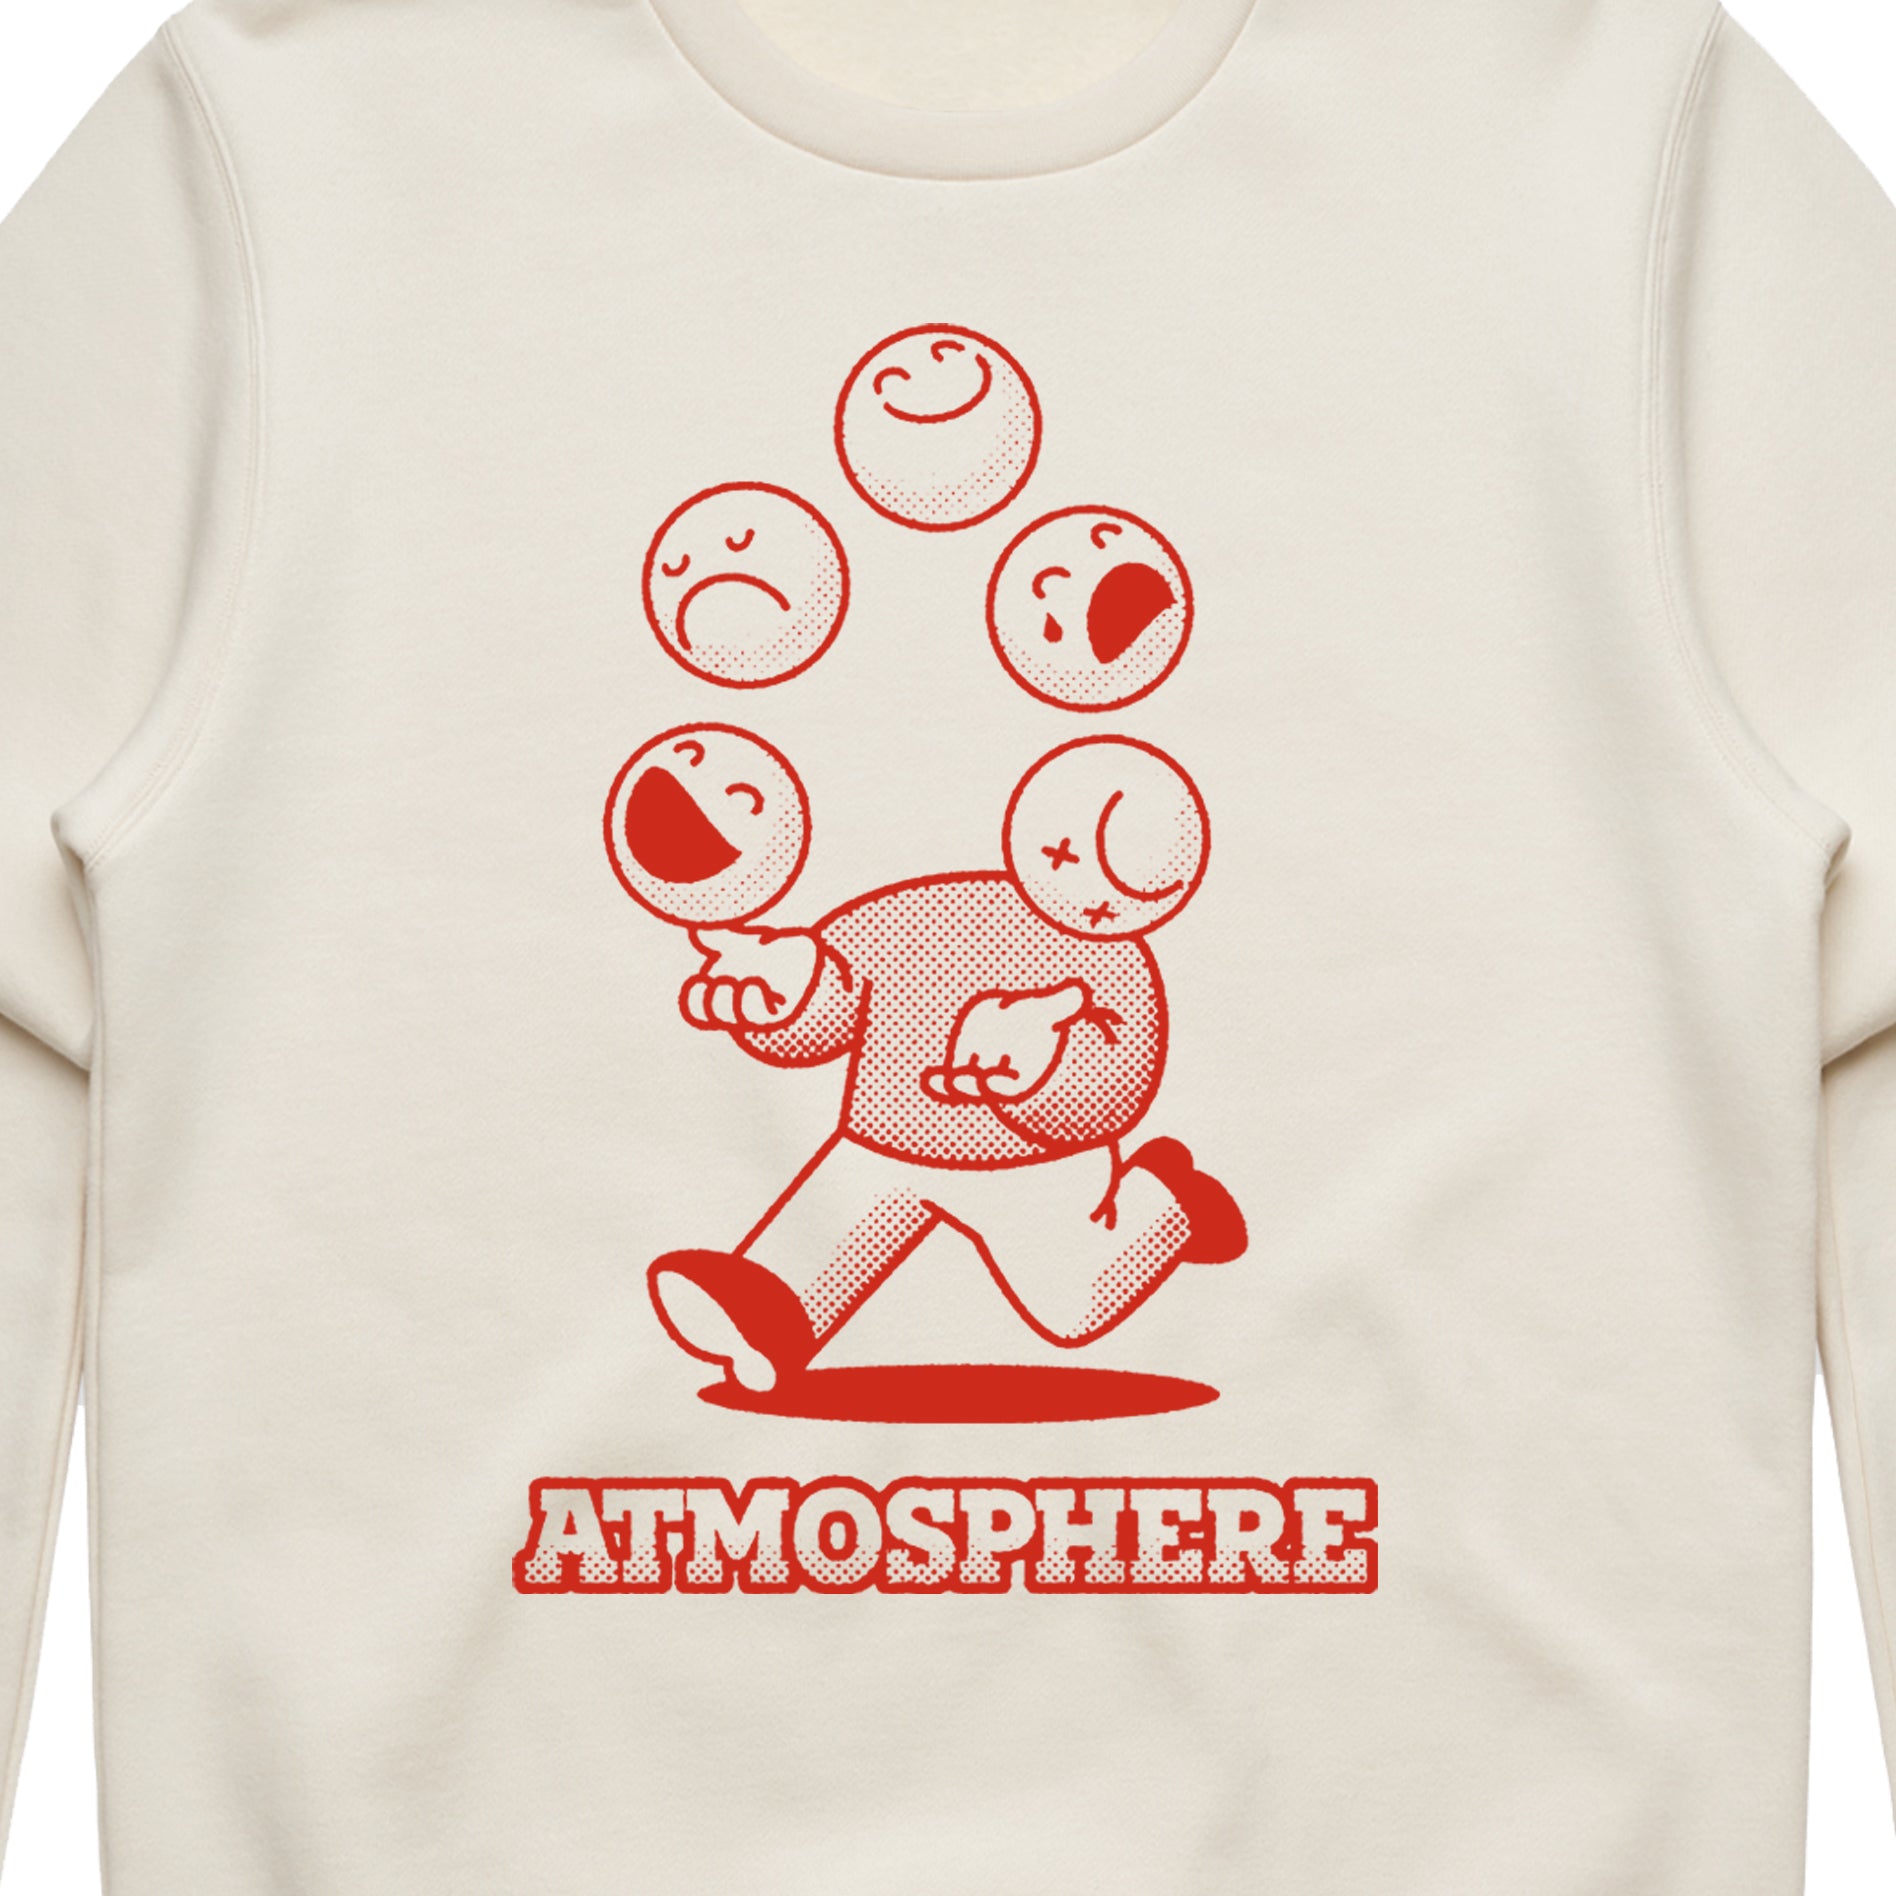 Atmosphere - Juggle Crewneck Sweater